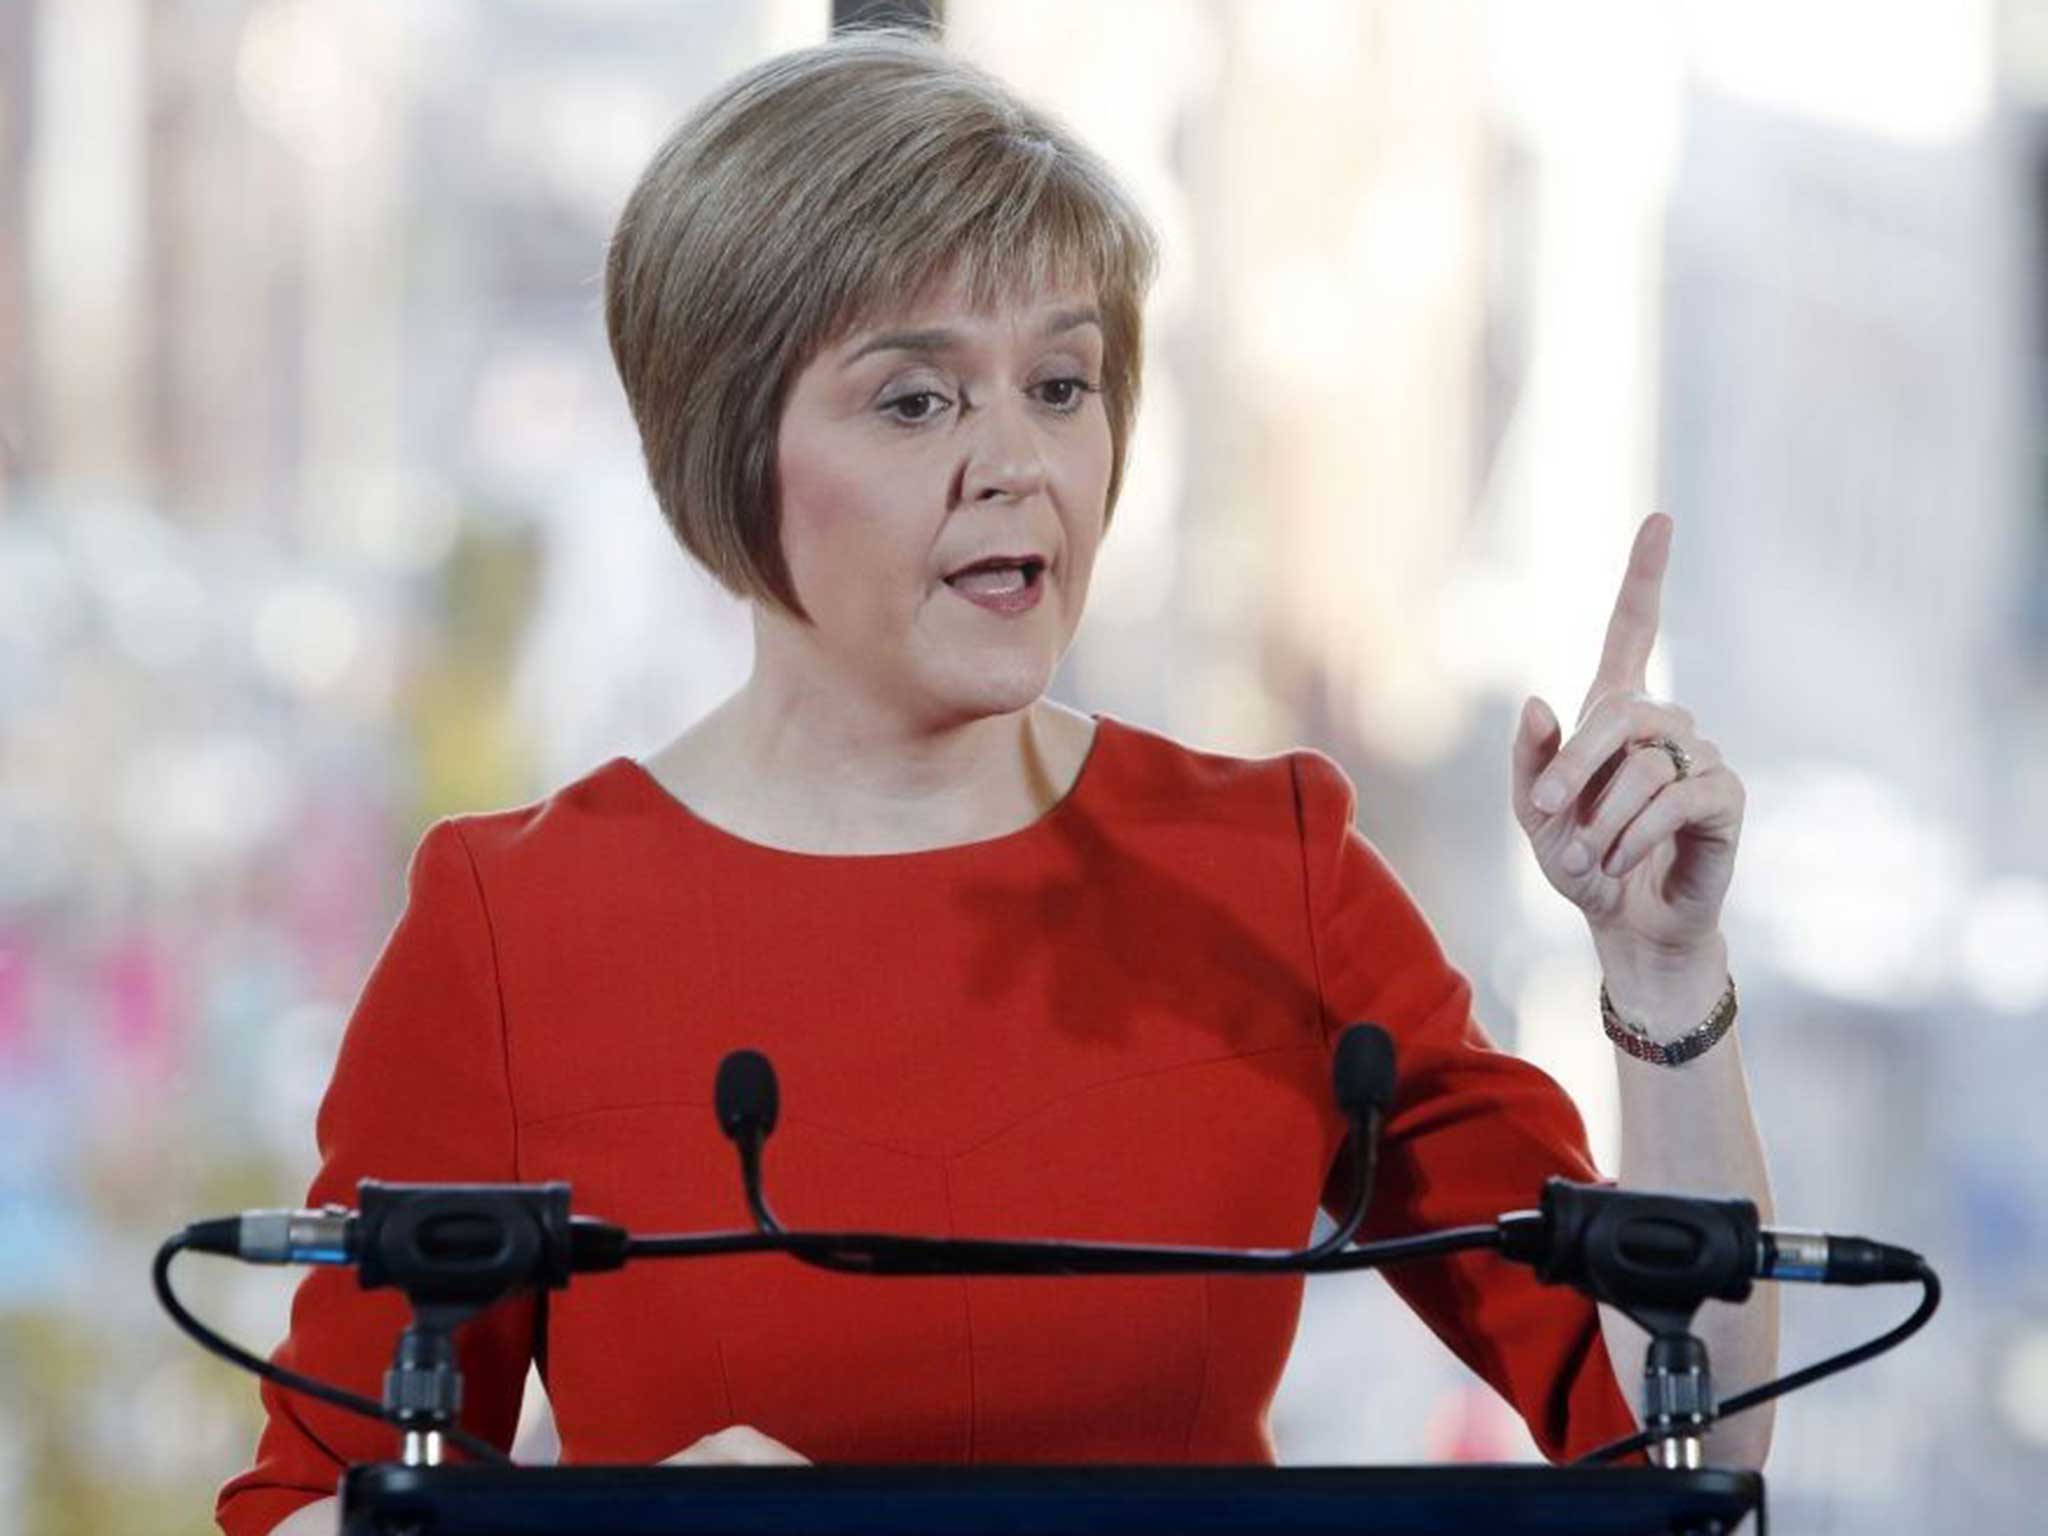 Nicola Sturgeon is Scotland's First Minister